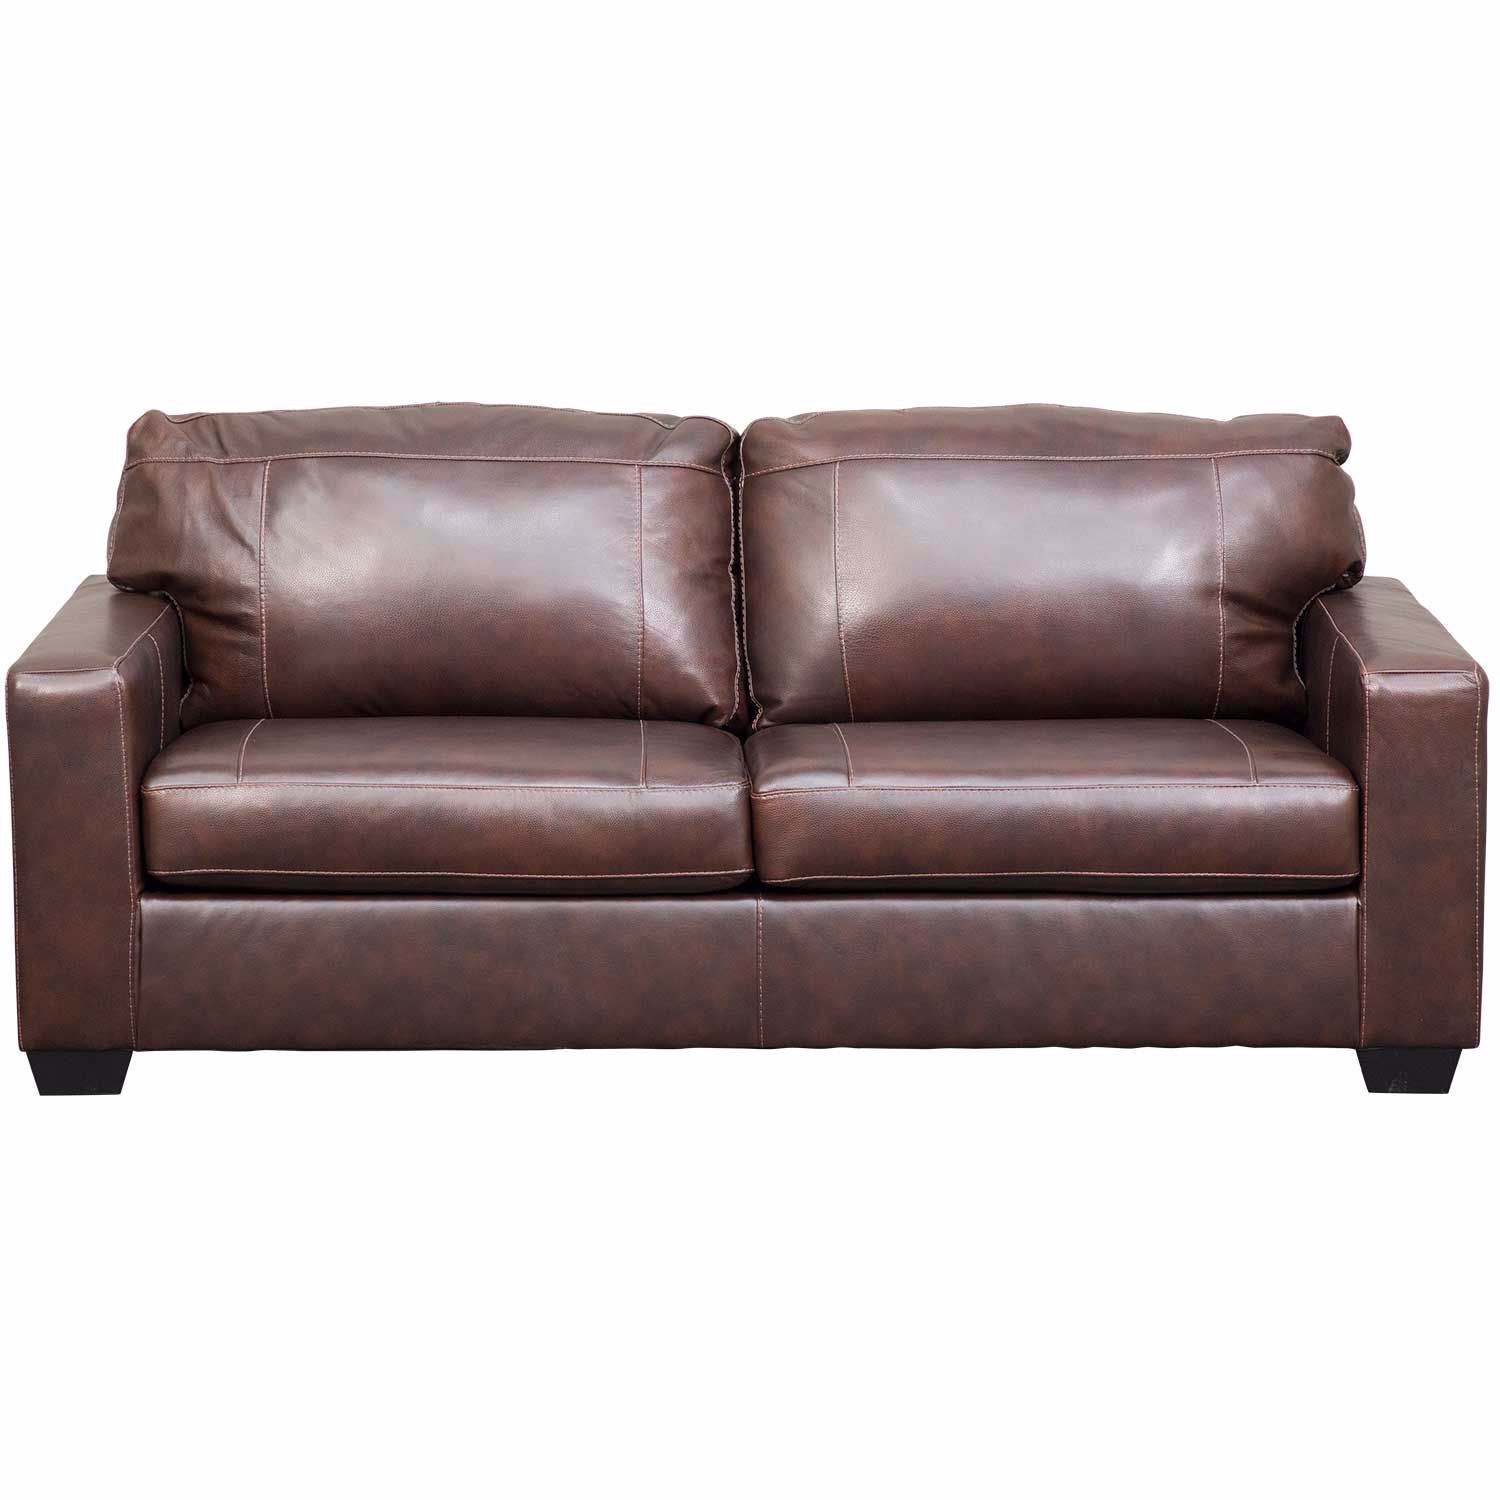 Morelos Brown Italian Leather Sofa 3450238 Ashley